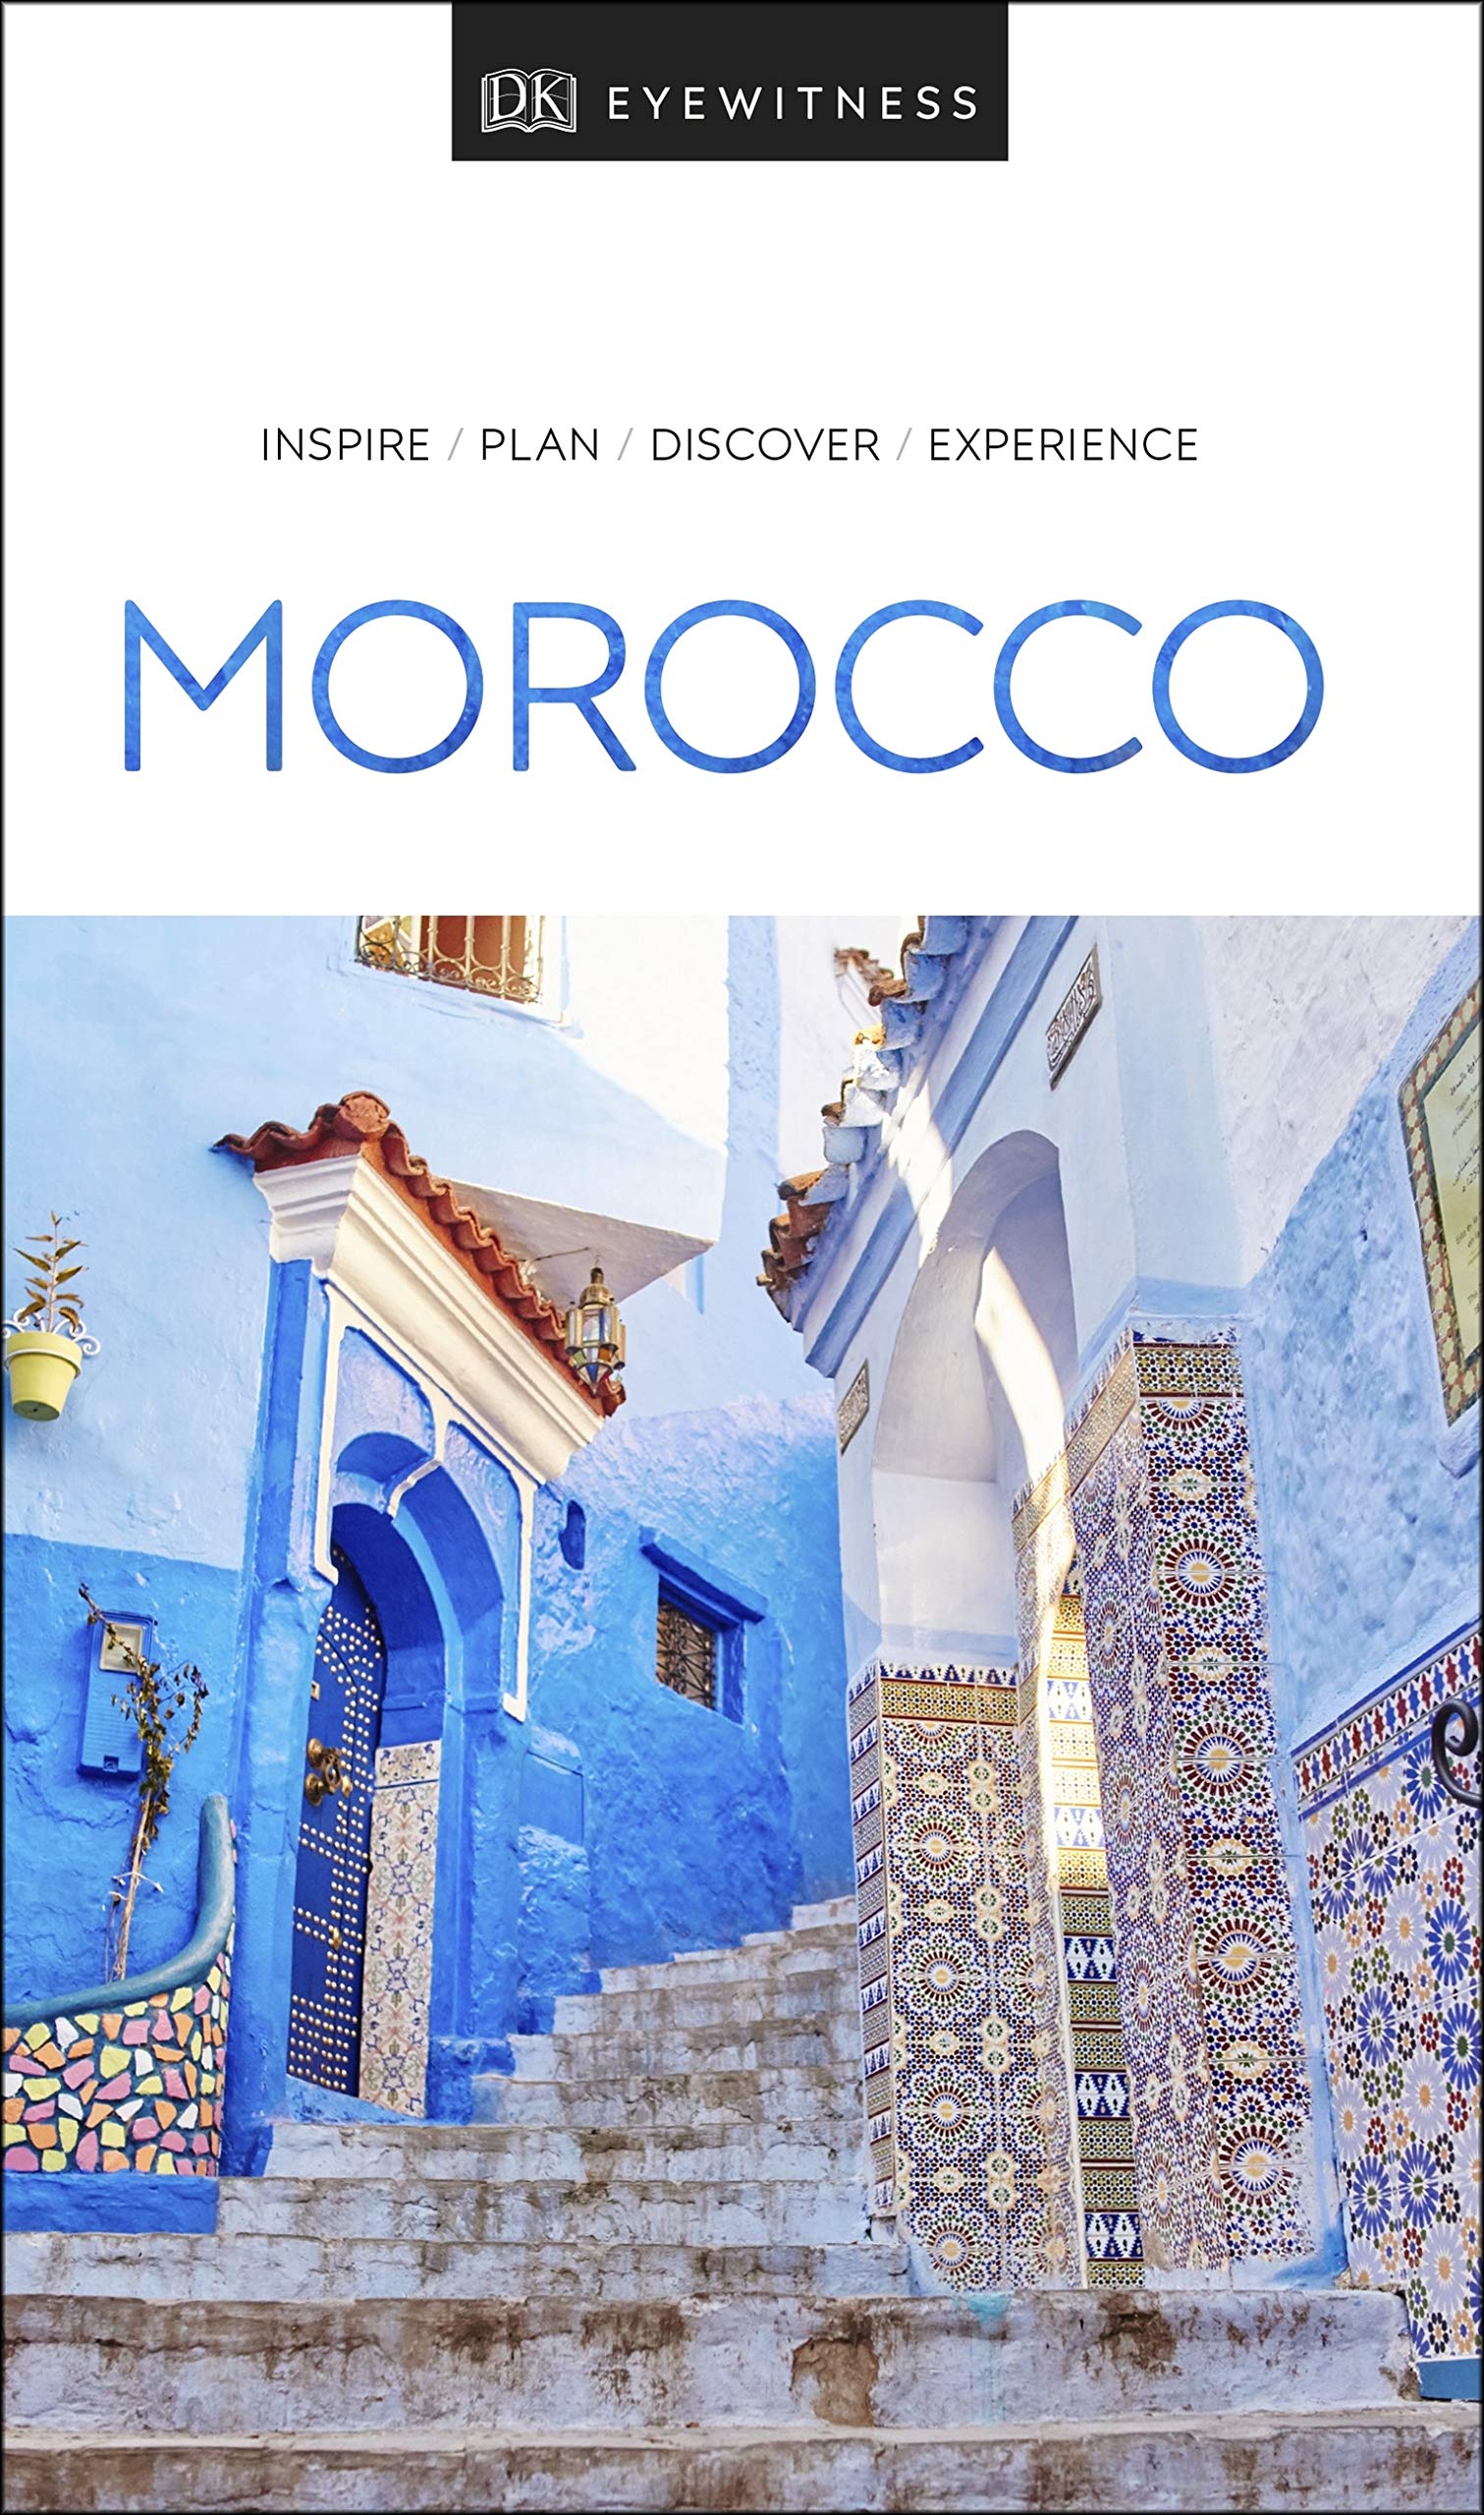 DK Eyewitness Travel - Morocco 